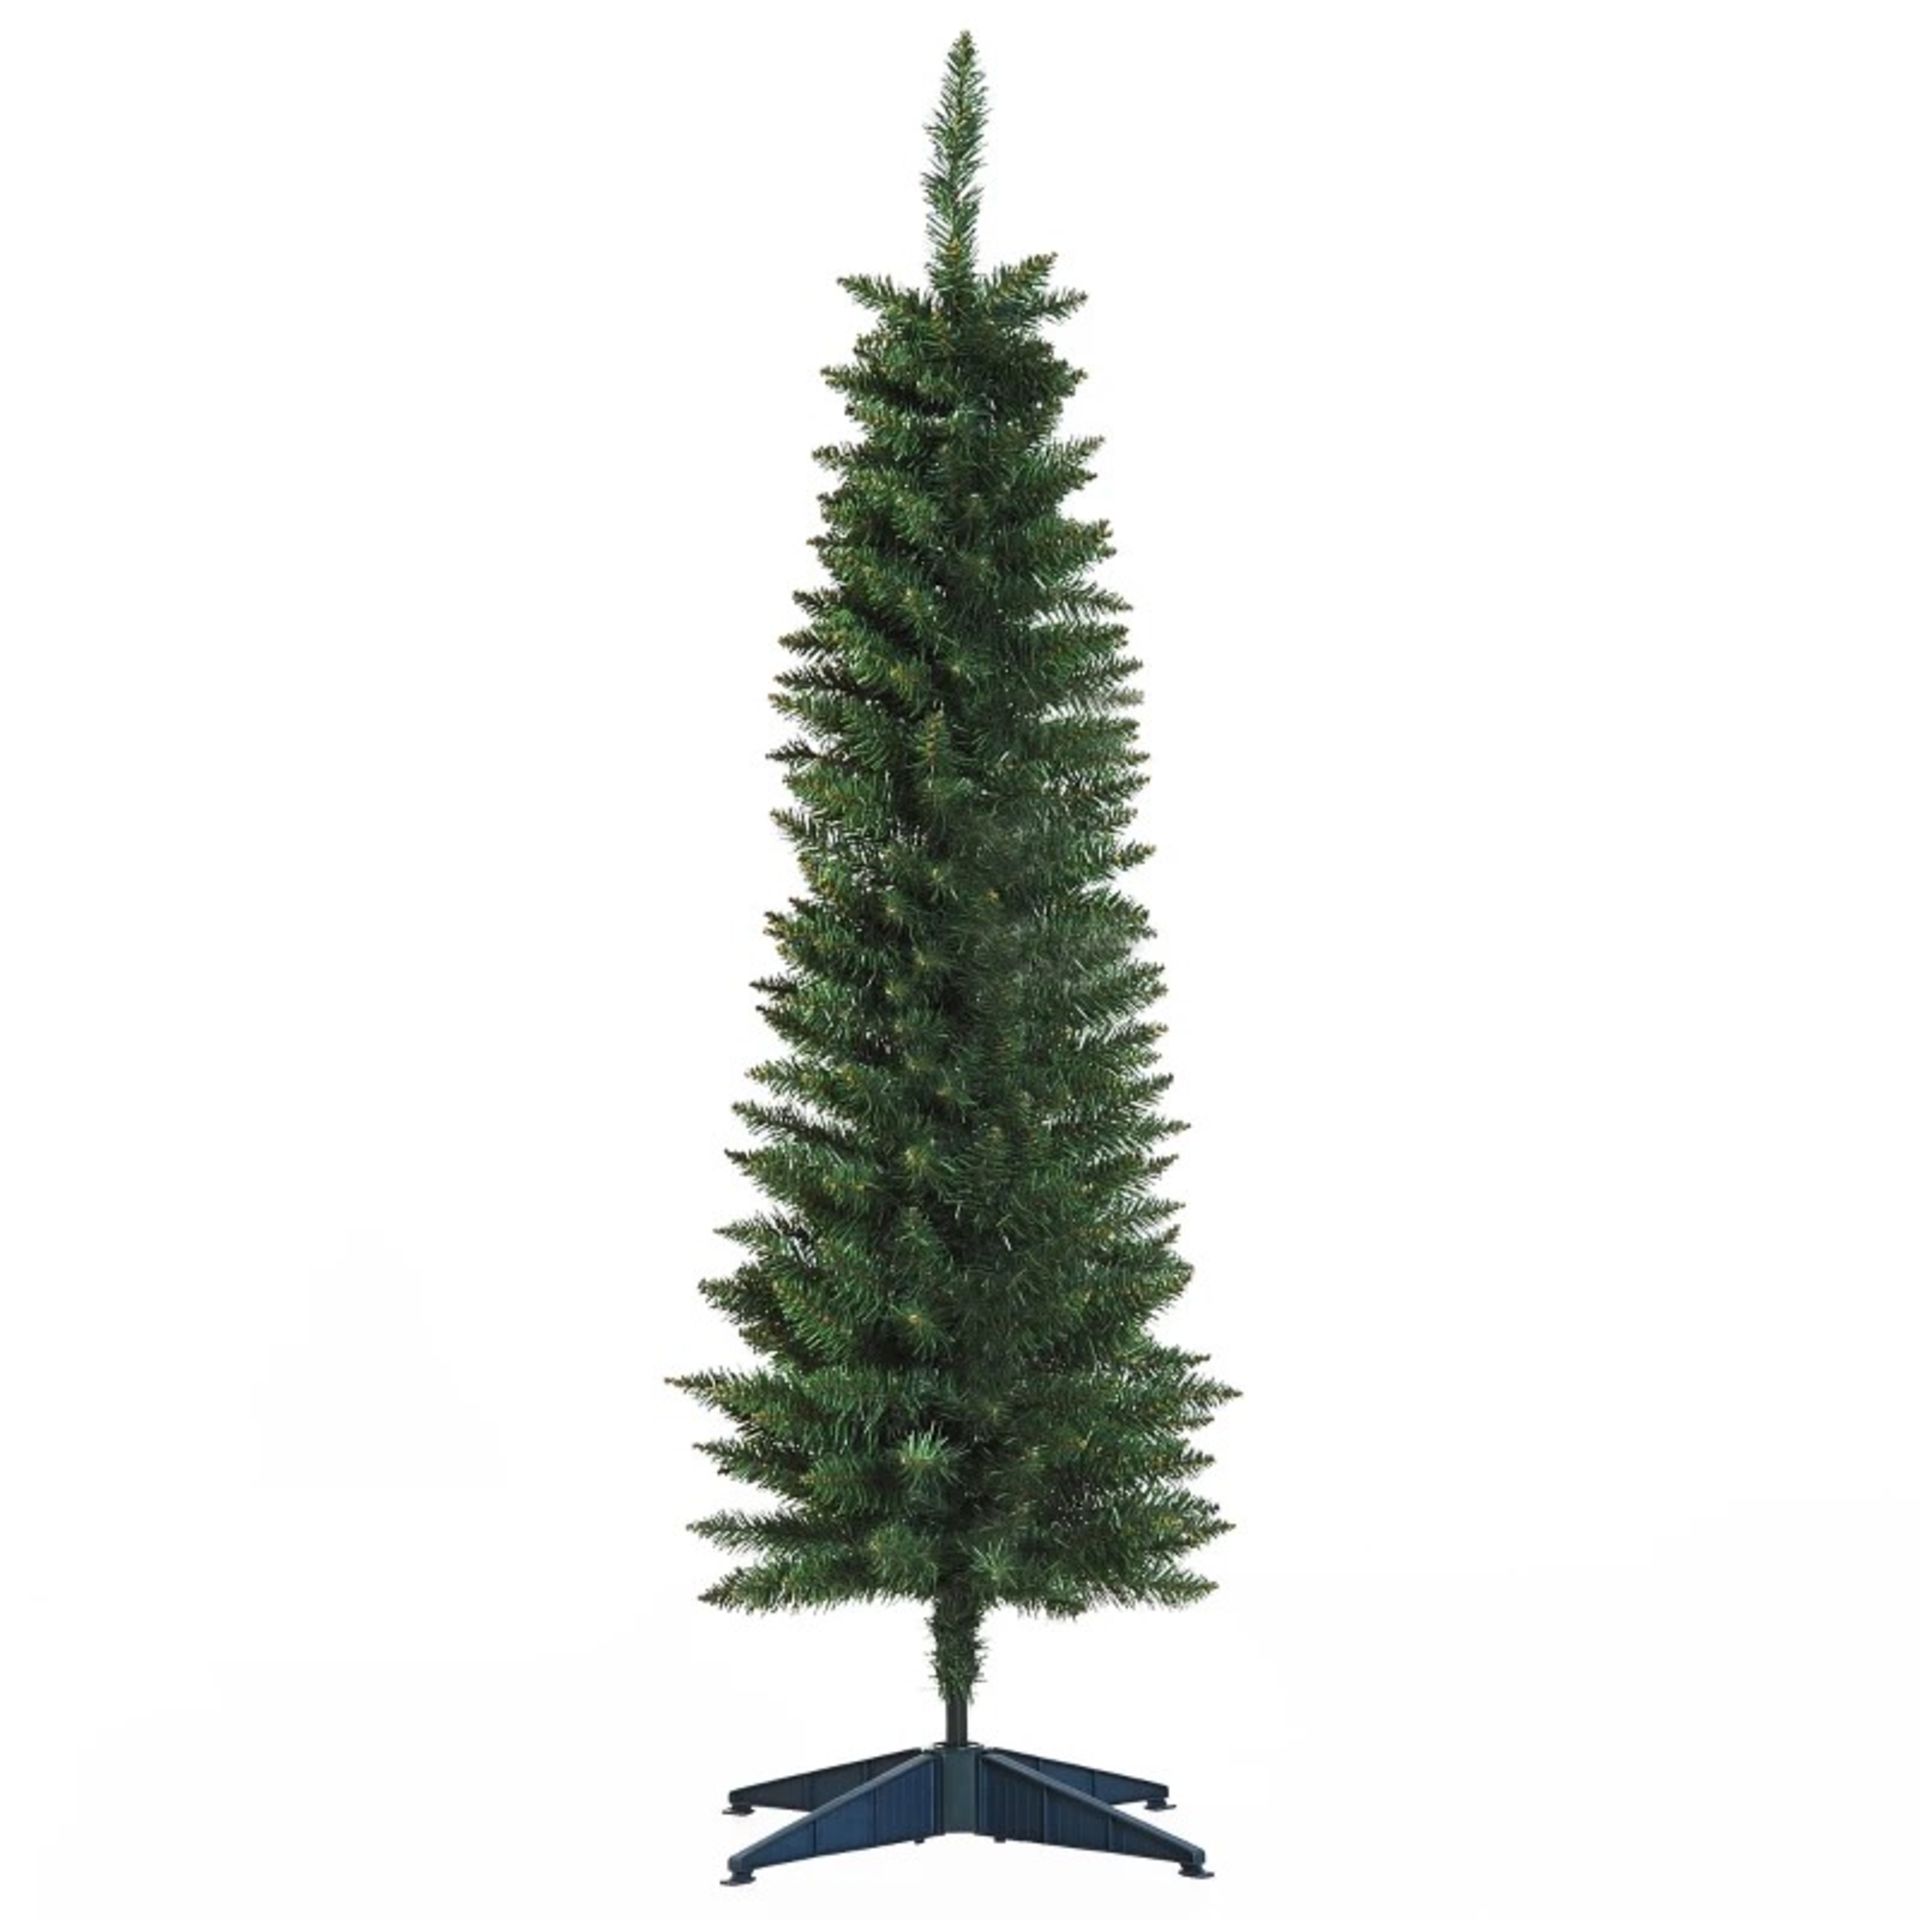 RRP £35.99 - HOMCOM 5FT Artificial Pine Pencil Slim Tall Christmas Tree with 294 Branch Tips Xmas